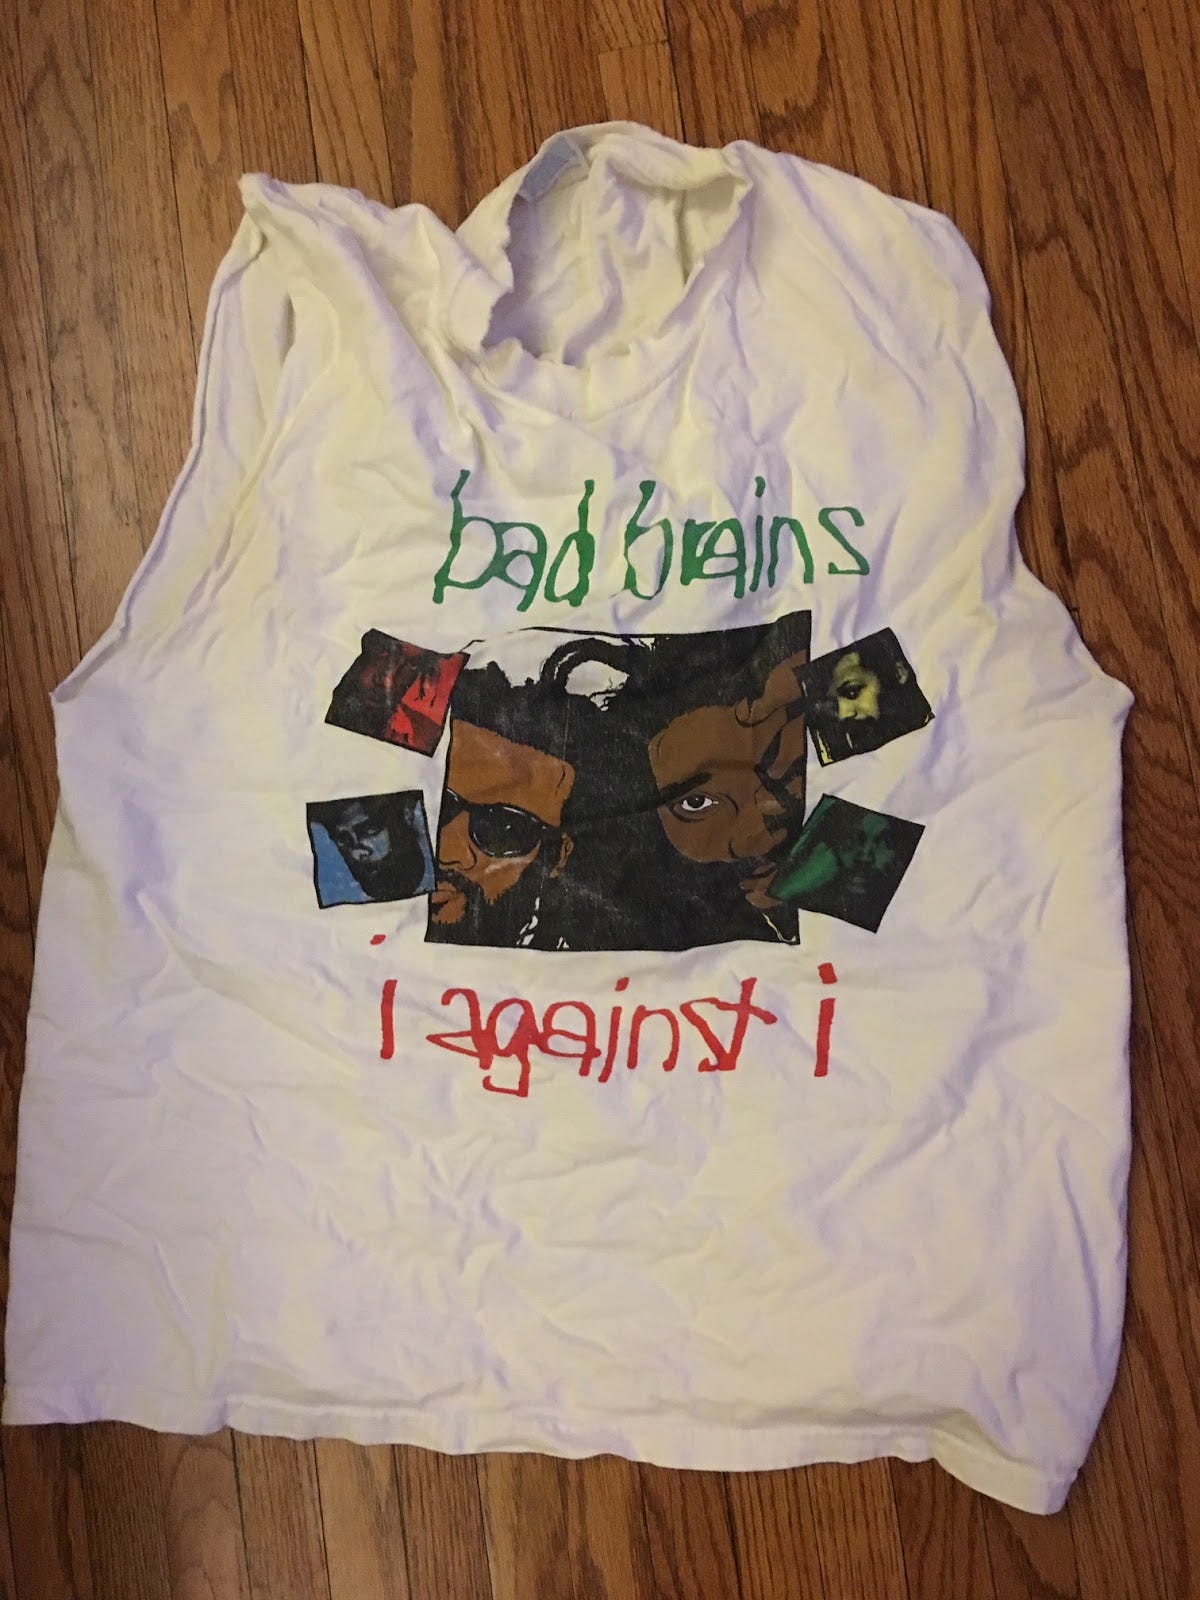 Shit That I Love: My Bad Brains T-shirt, by Matt Ramirez